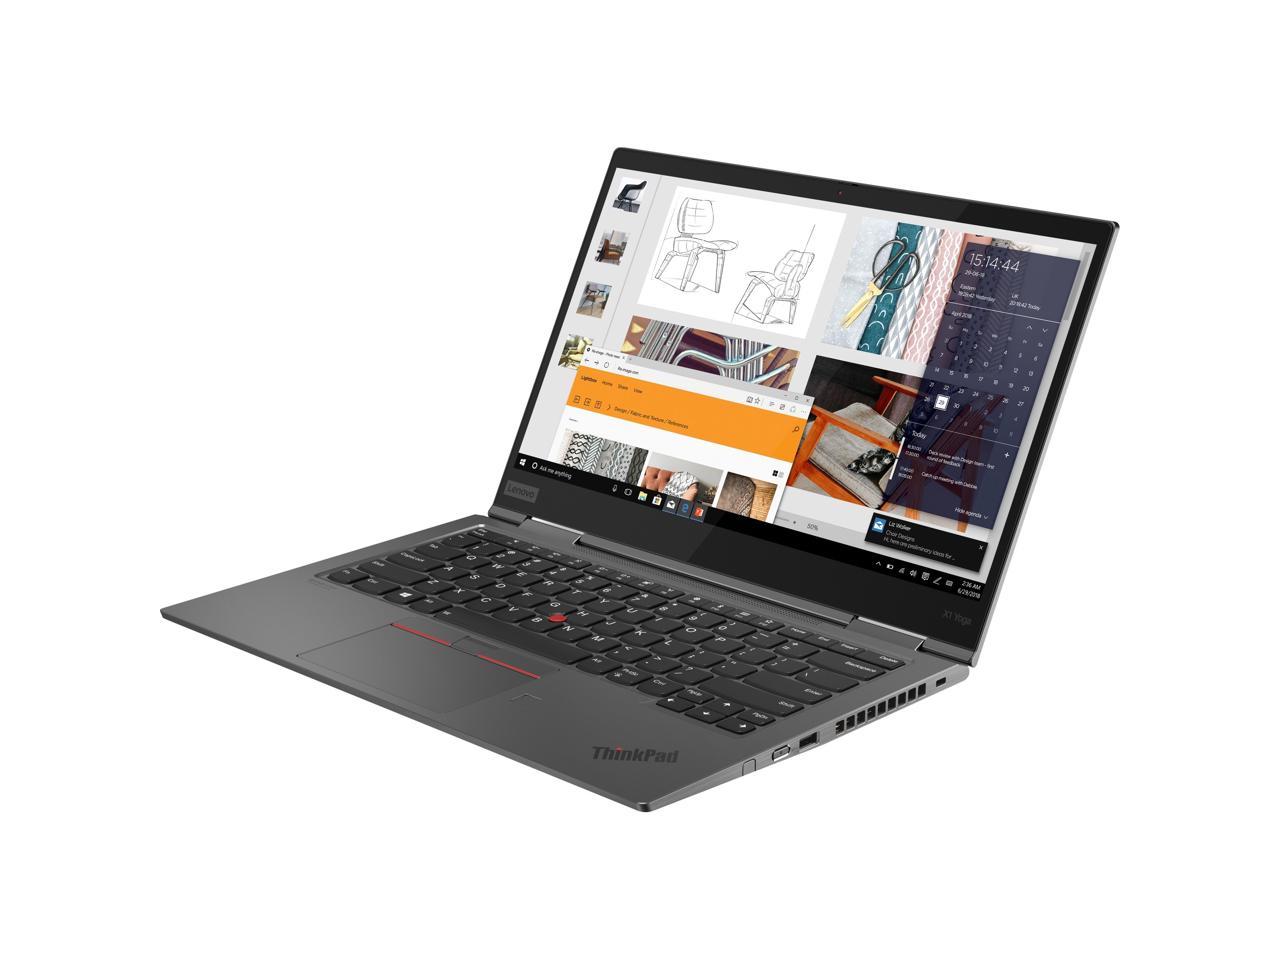 Lenovo ThinkPad X1 Yoga Flip 14" Touchscreen Laptop i5-10210U 16GB 256GB SSD W10 195042483604 | eBay